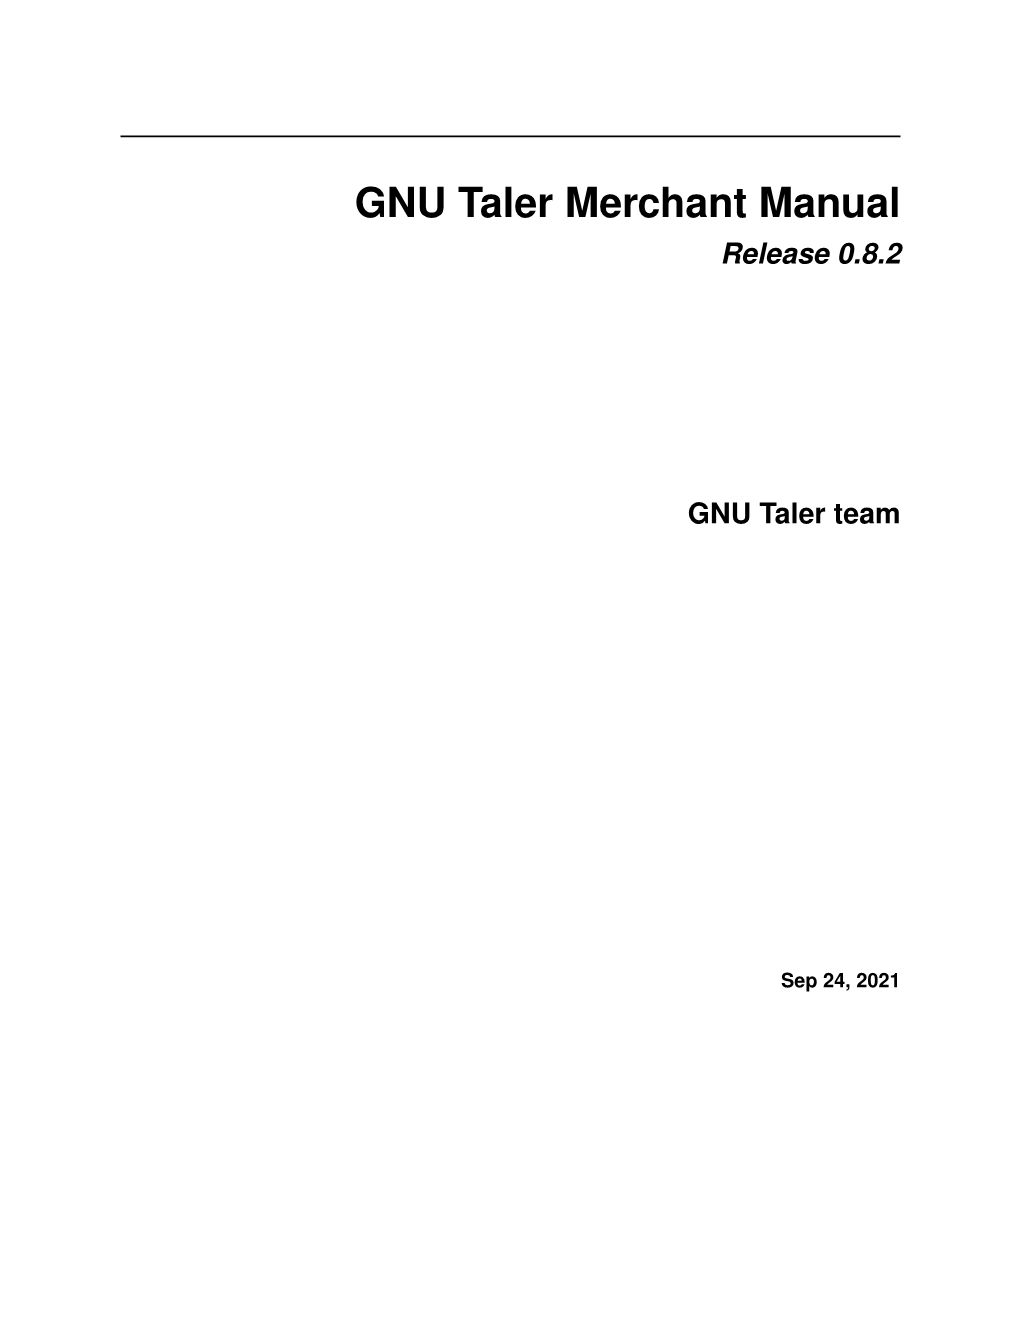 GNU Taler Merchant Manual Release 0.8.2